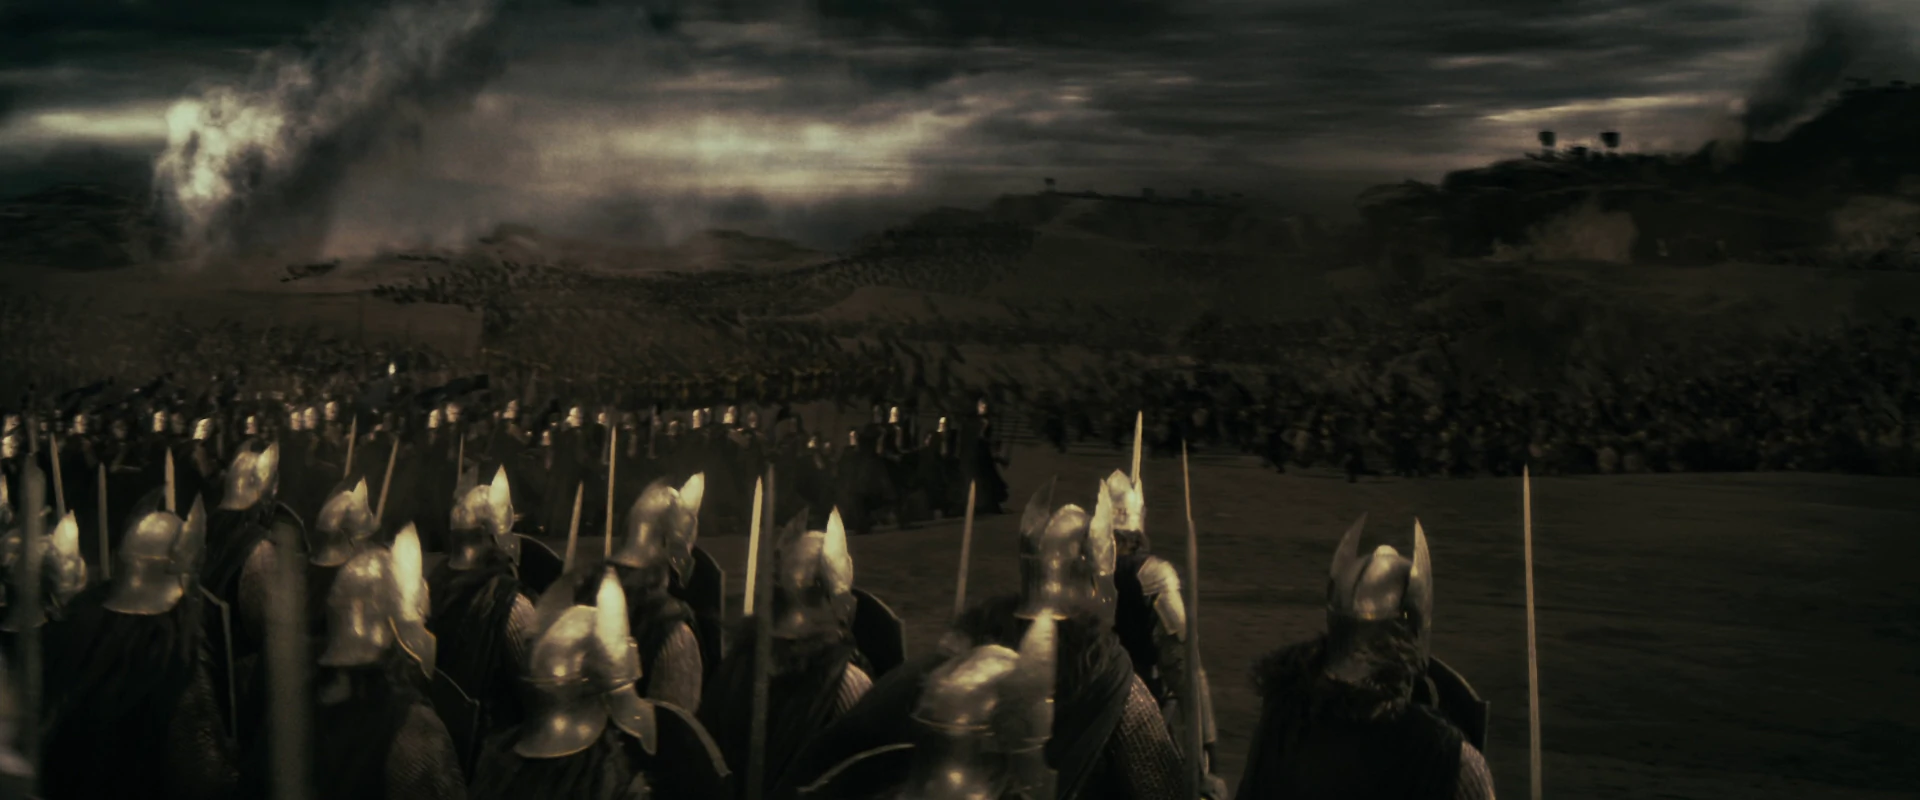 The Beacons of Gondor Summon You To Minas Tirith—Experience the